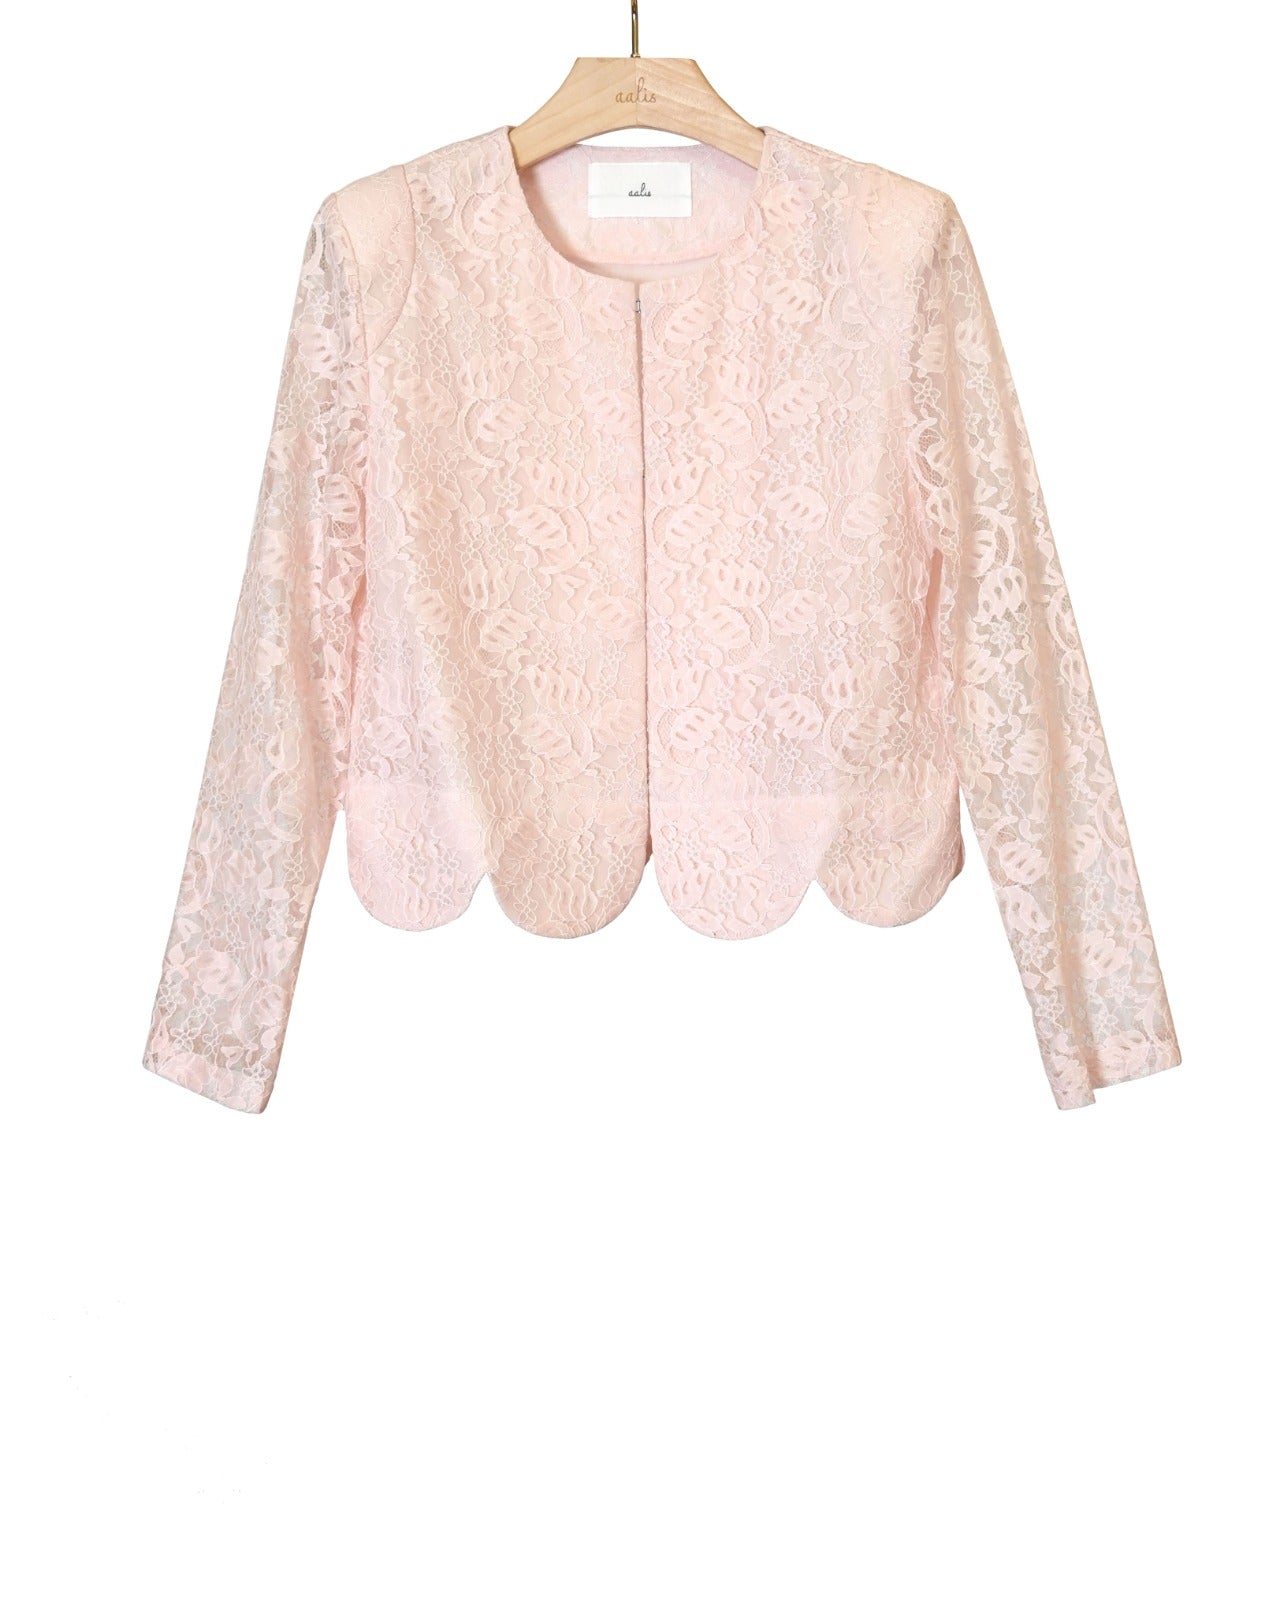 aalis VICTORIA lace jacket (Light pink)